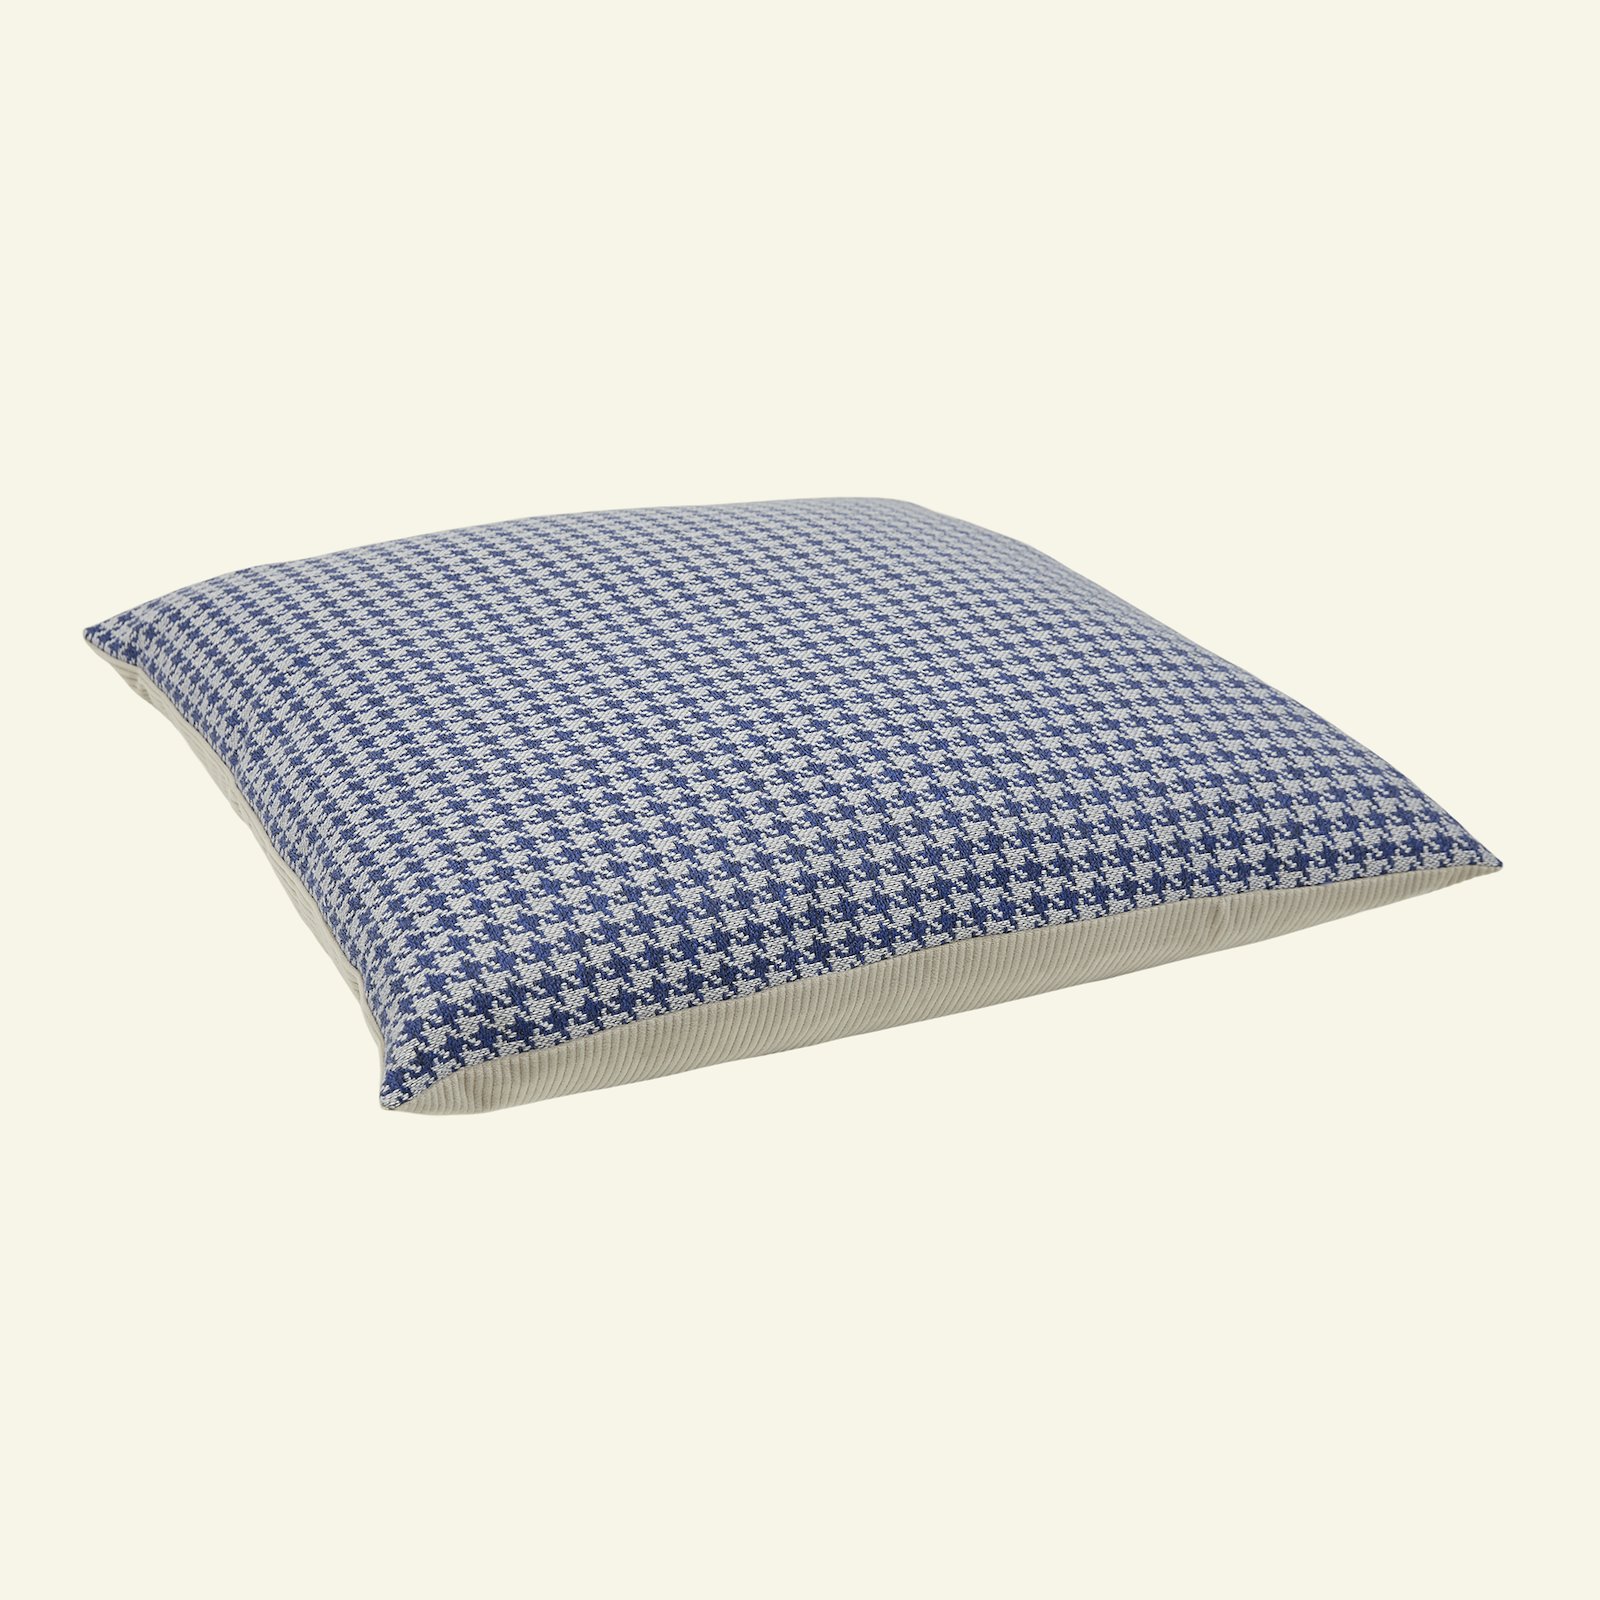 Upholstery grey/blue yarndyed checks 826267_826254_sskit